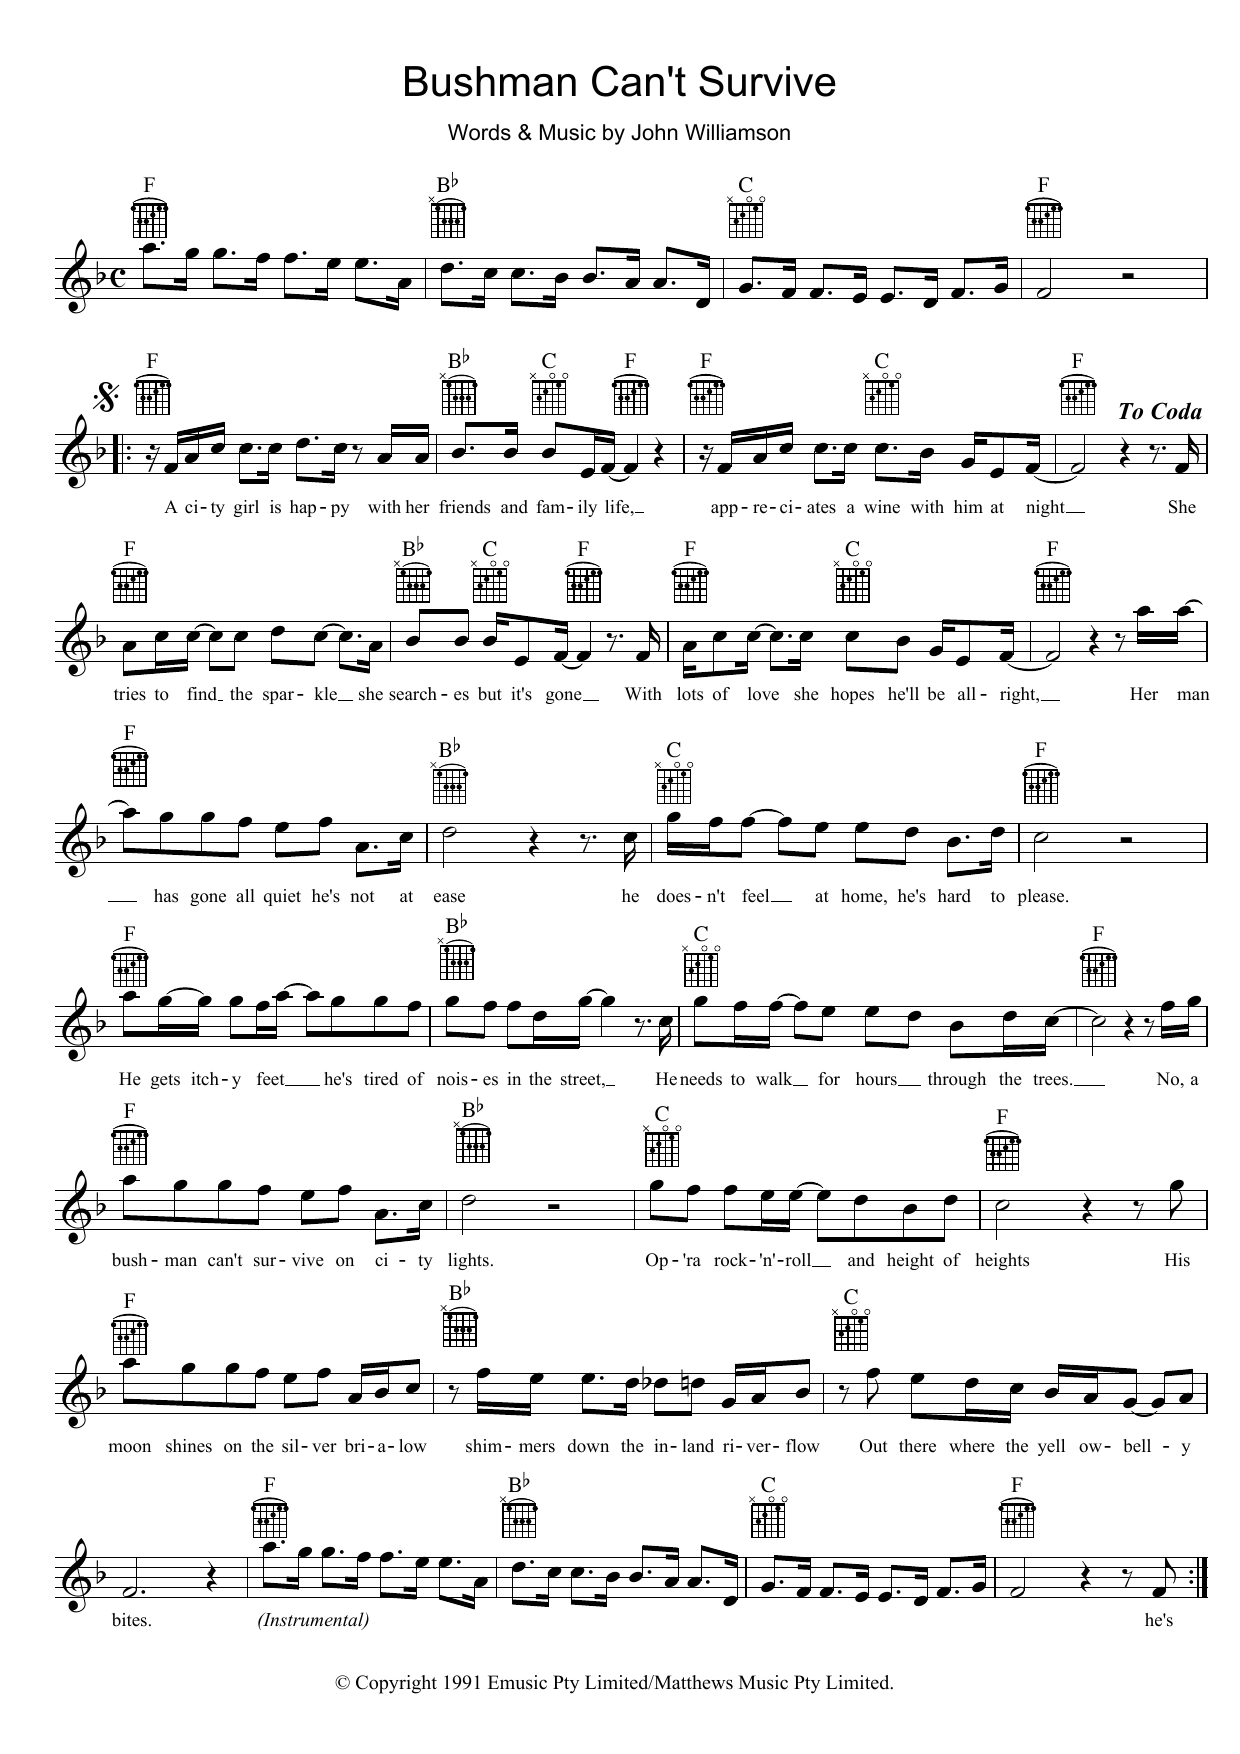 John Williamson Bushman Can't Survive Sheet Music Notes & Chords for Melody Line, Lyrics & Chords - Download or Print PDF